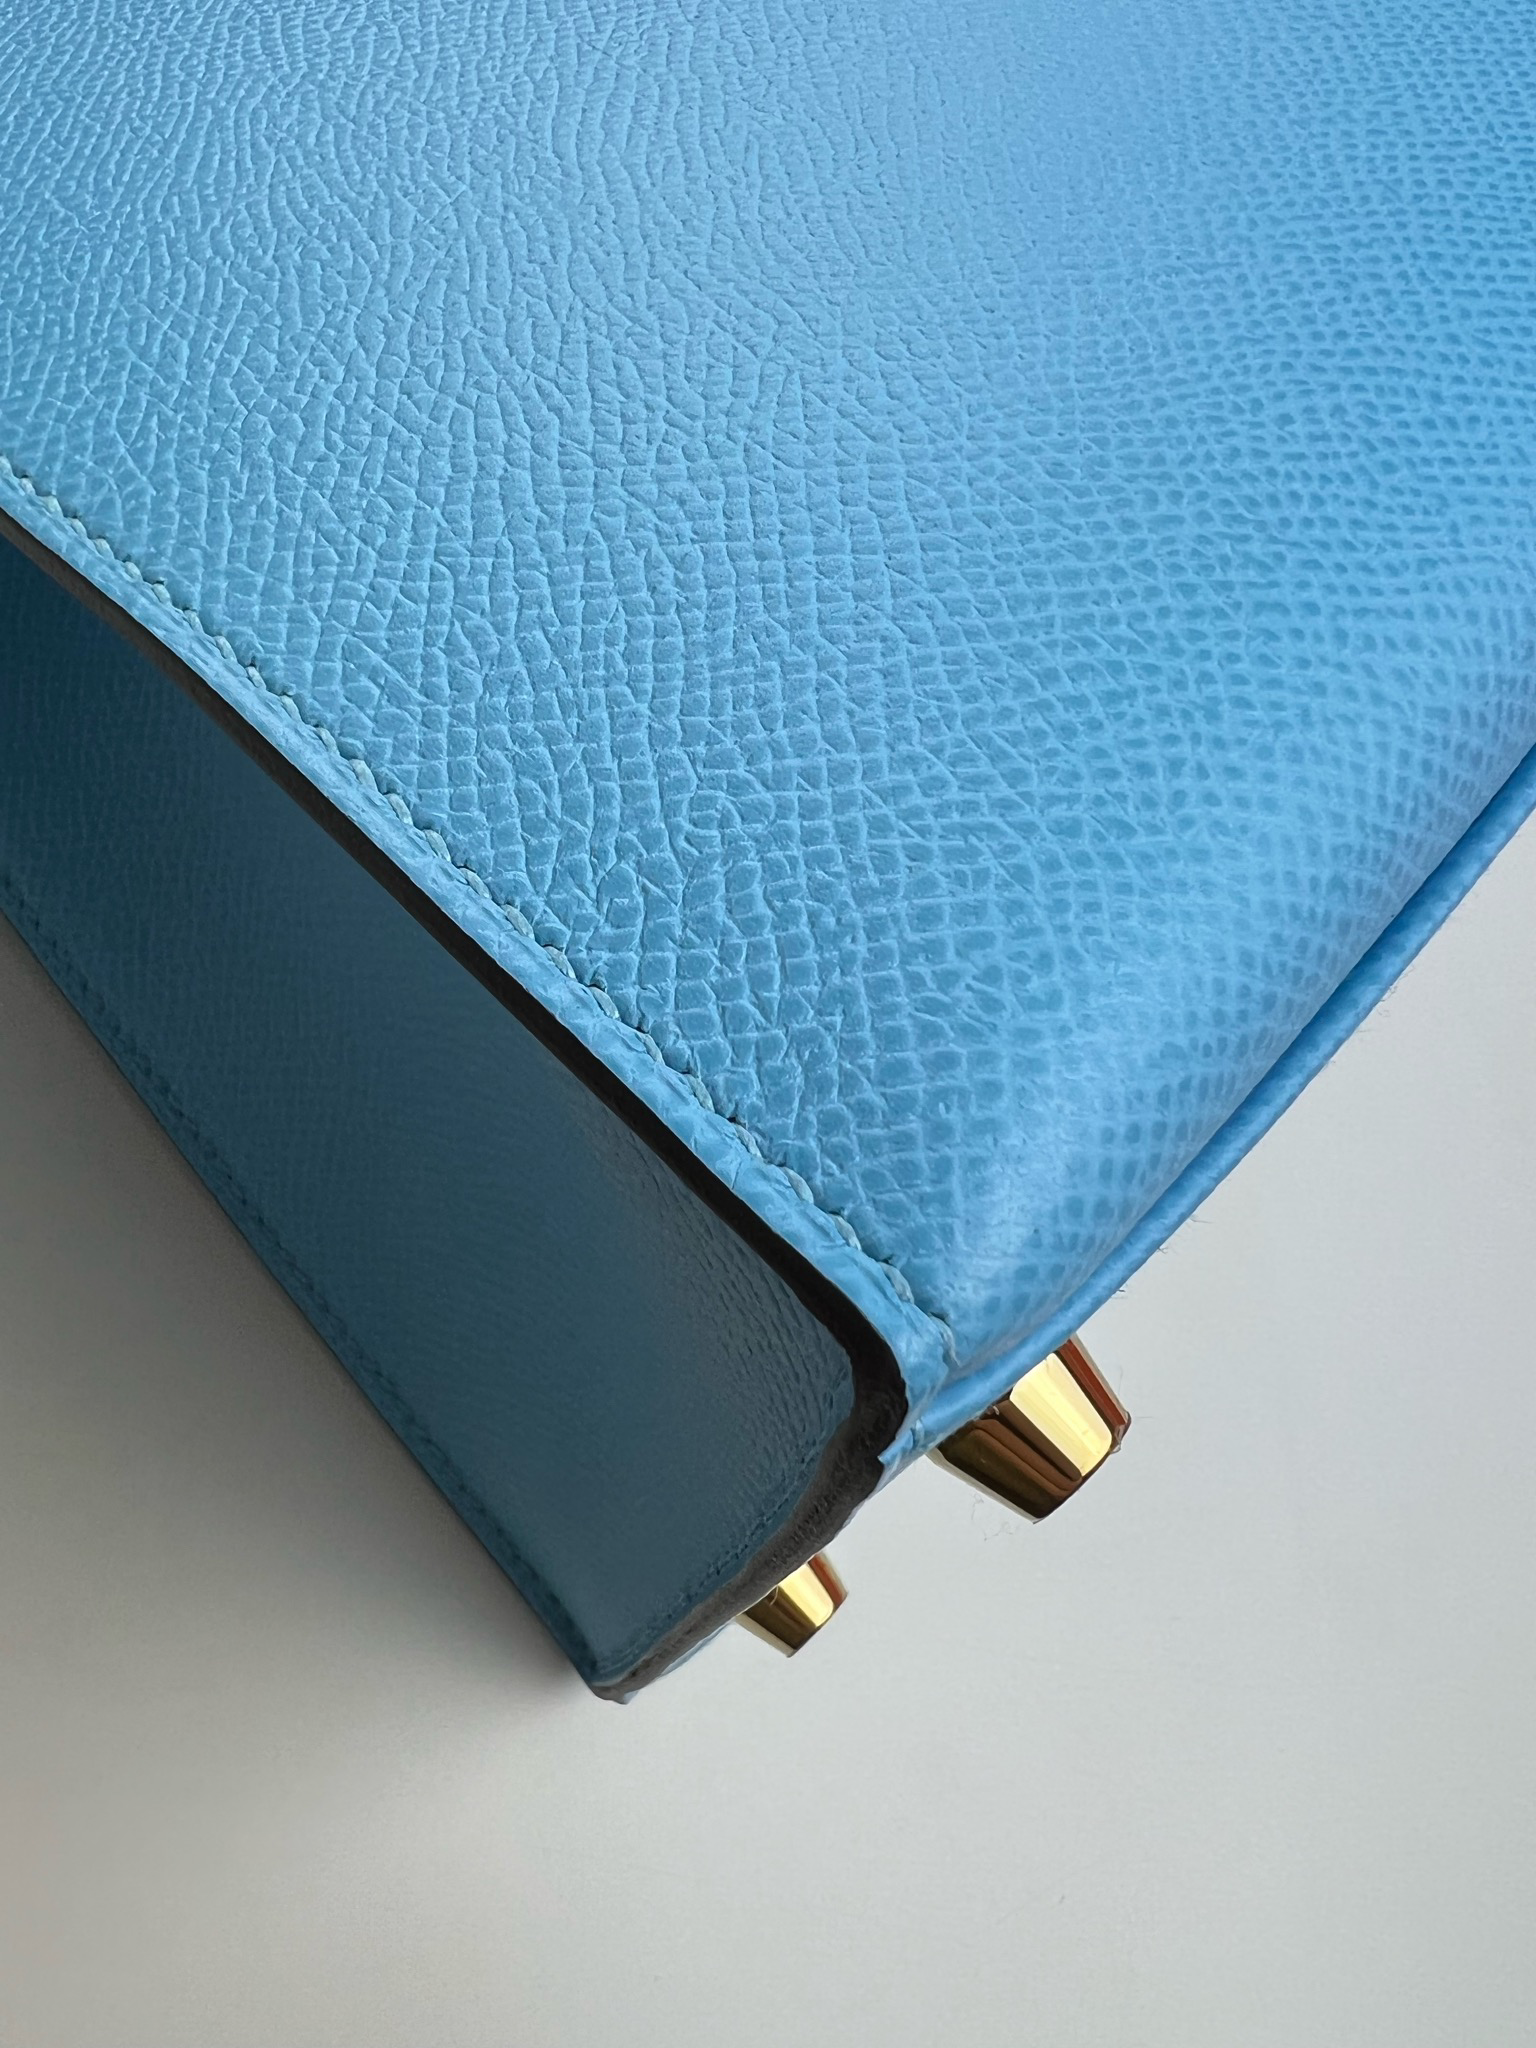 HERMÈS KELLY 28CM SELLIER BLUE CELESTE Epsom Leather with